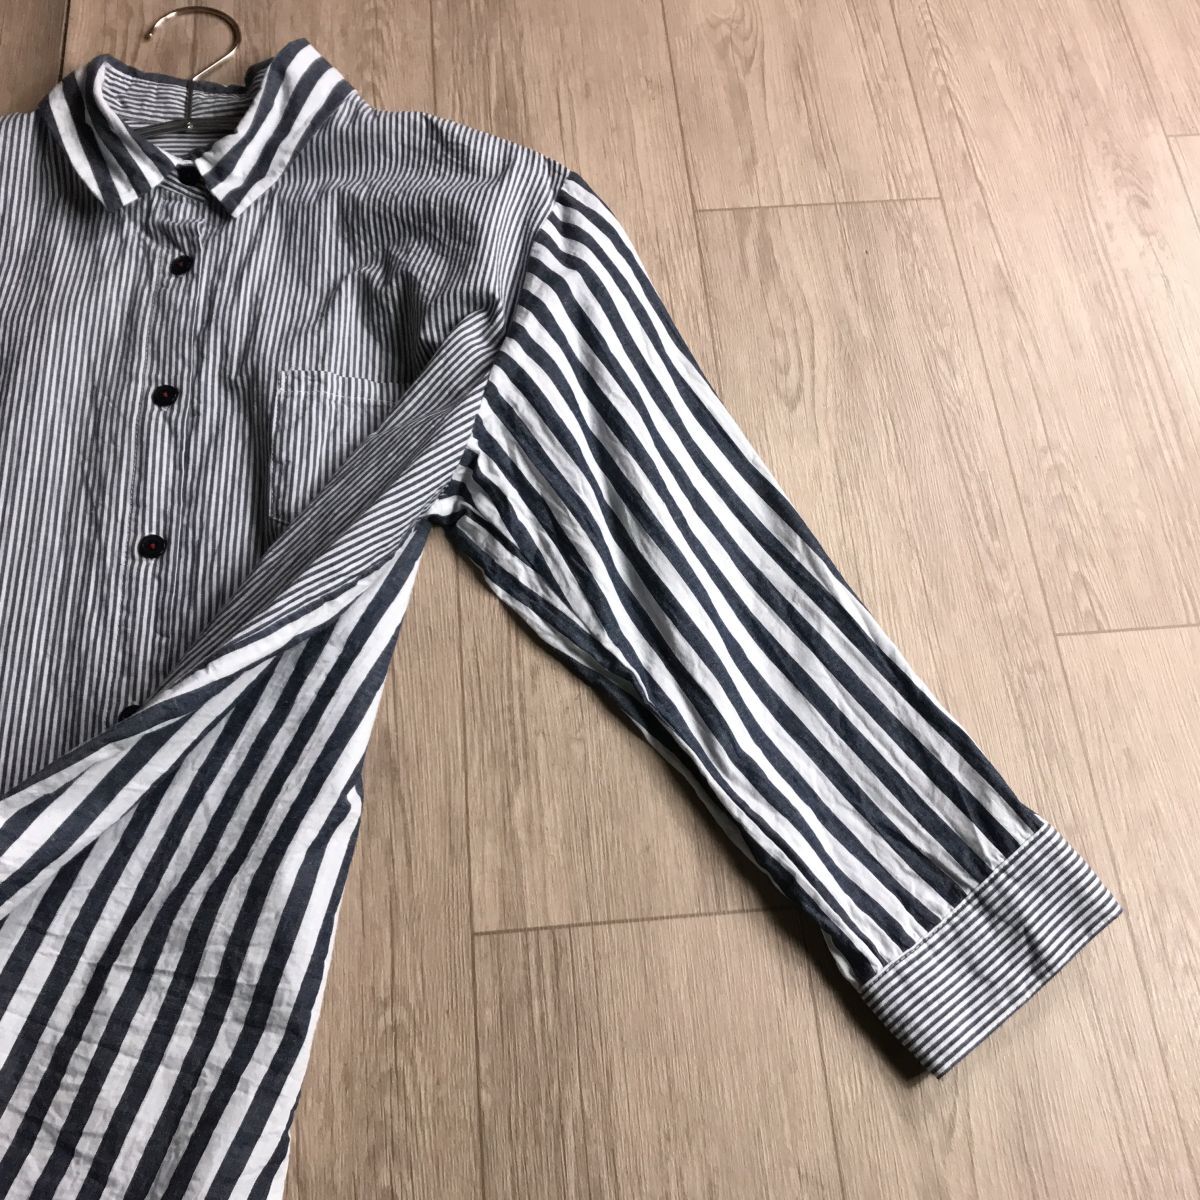 100 jpy start! noa-ge Noah -ju Ichinomiya fiber stylish design switch stripe blouse width easy body type cover 